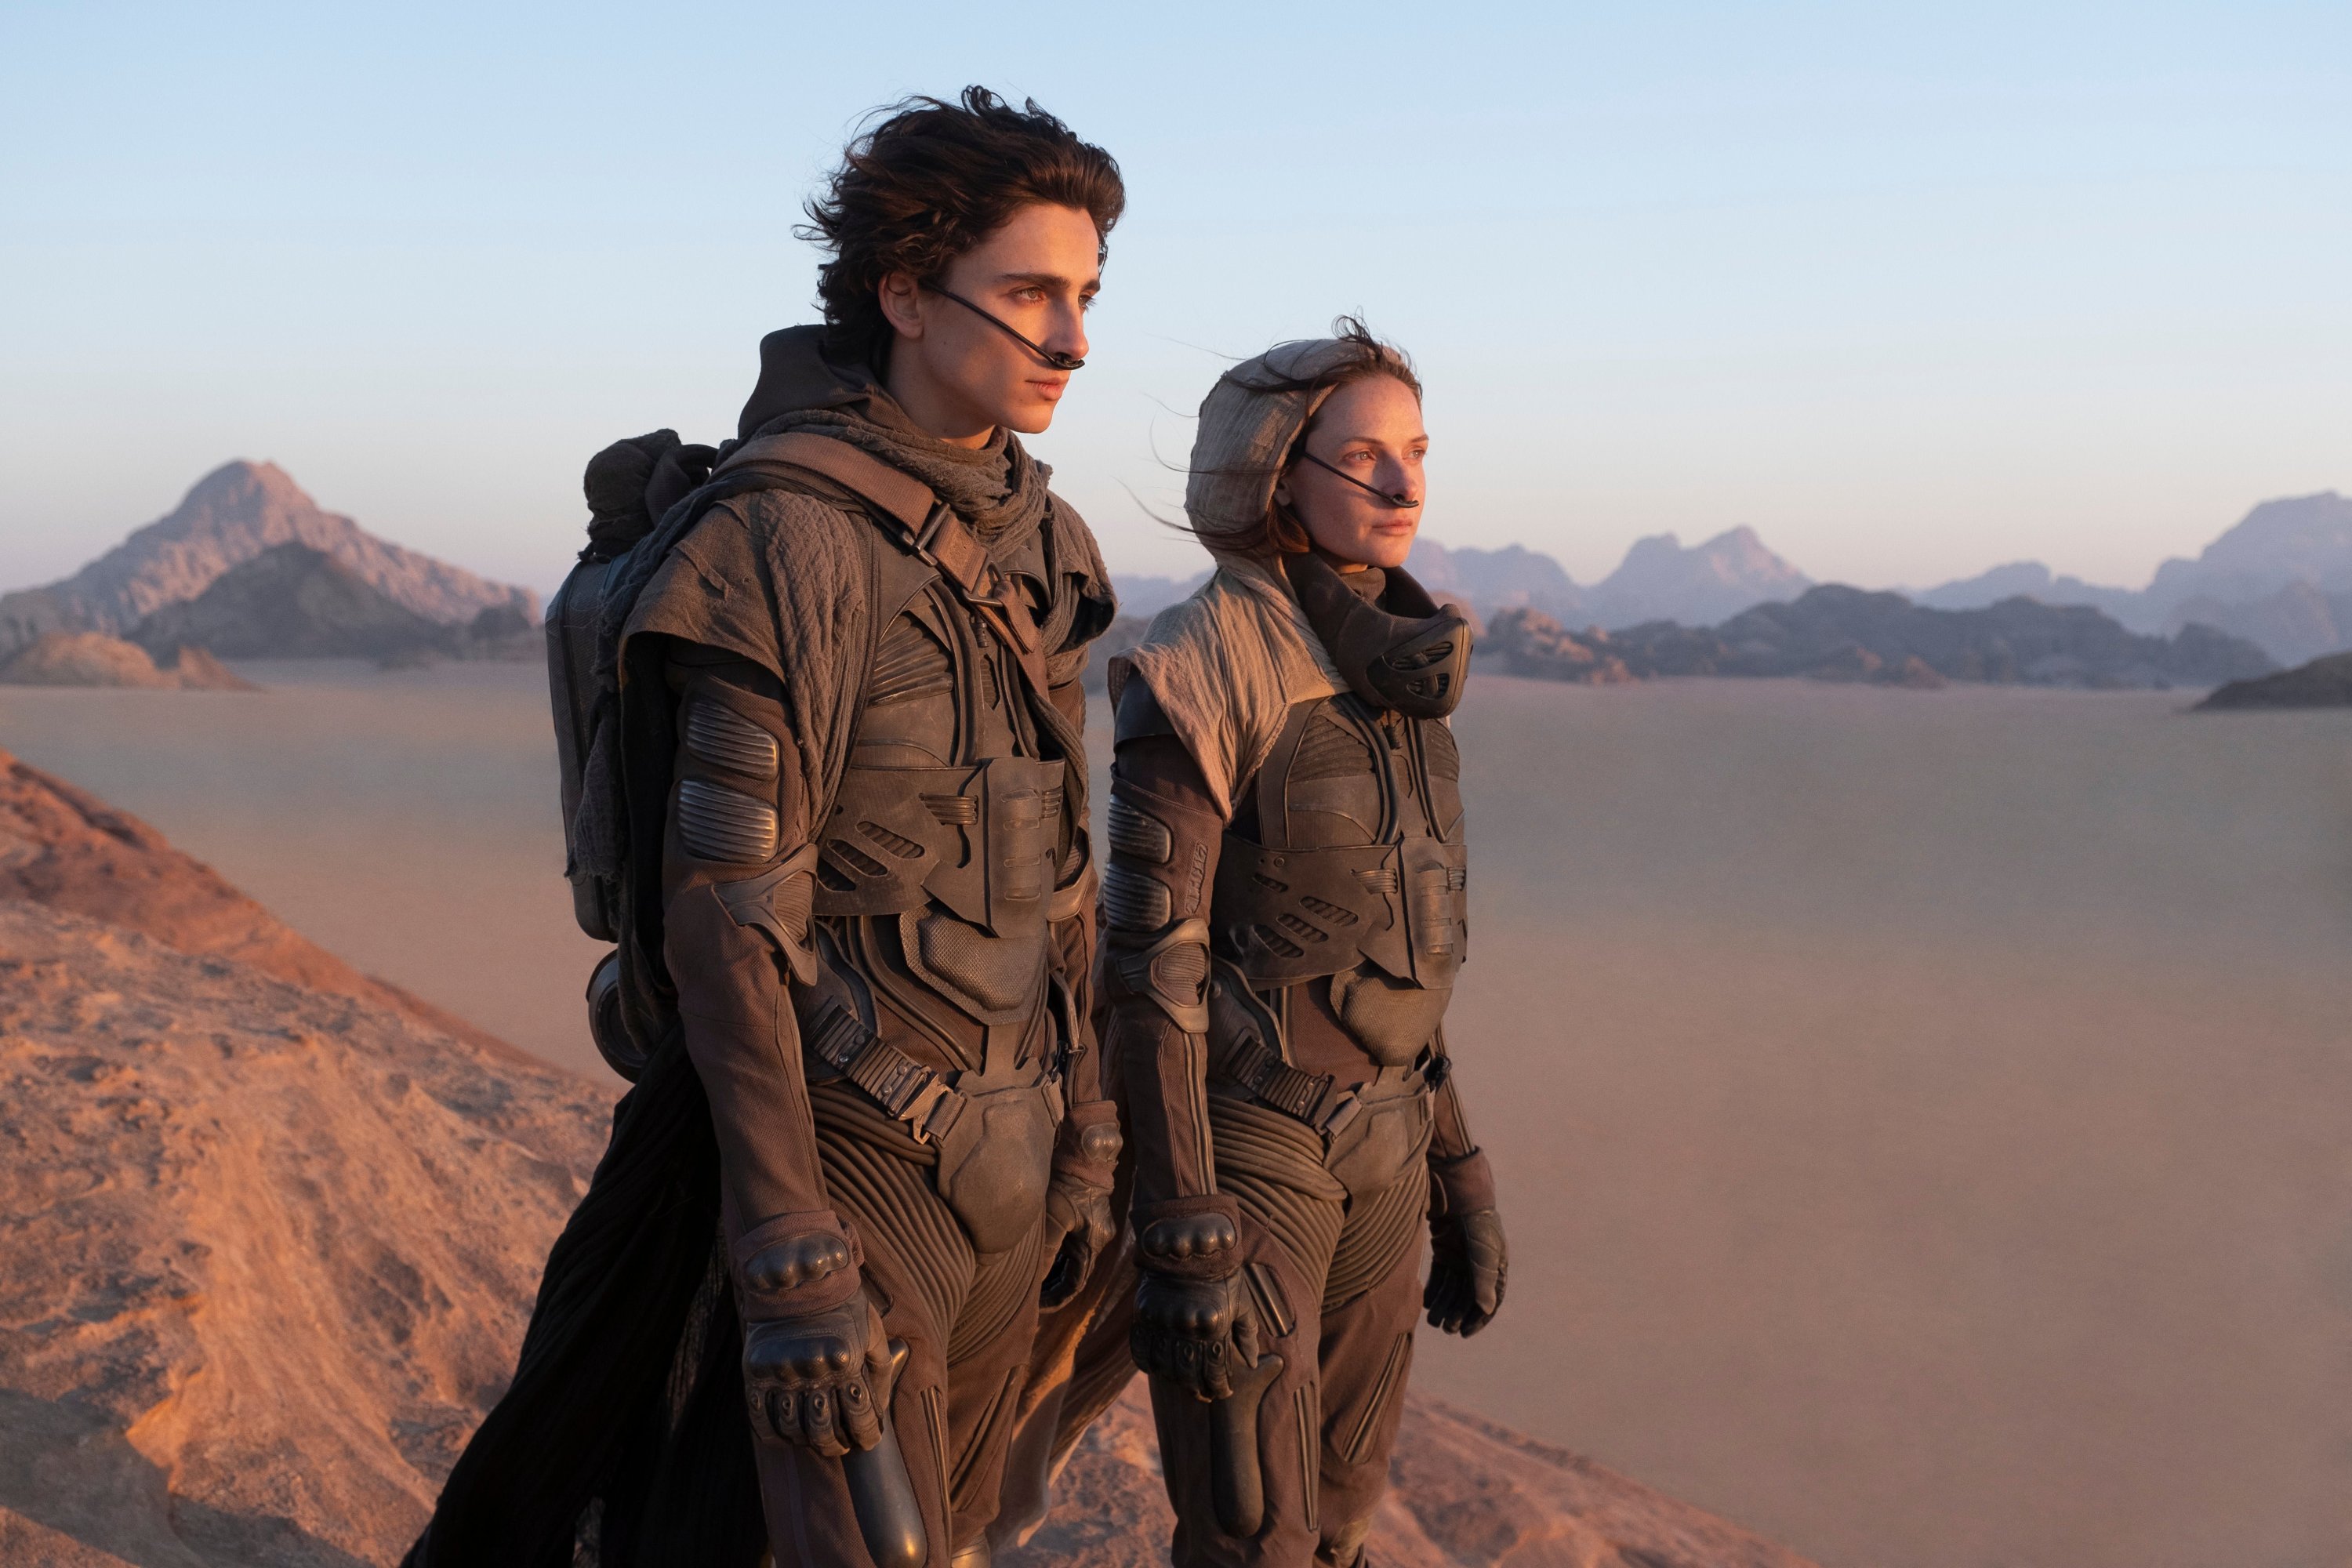 Timothee Chalamet (L) and Rebecca Ferguson in a scene from the film "Dune." (Warner Bros. via AP)